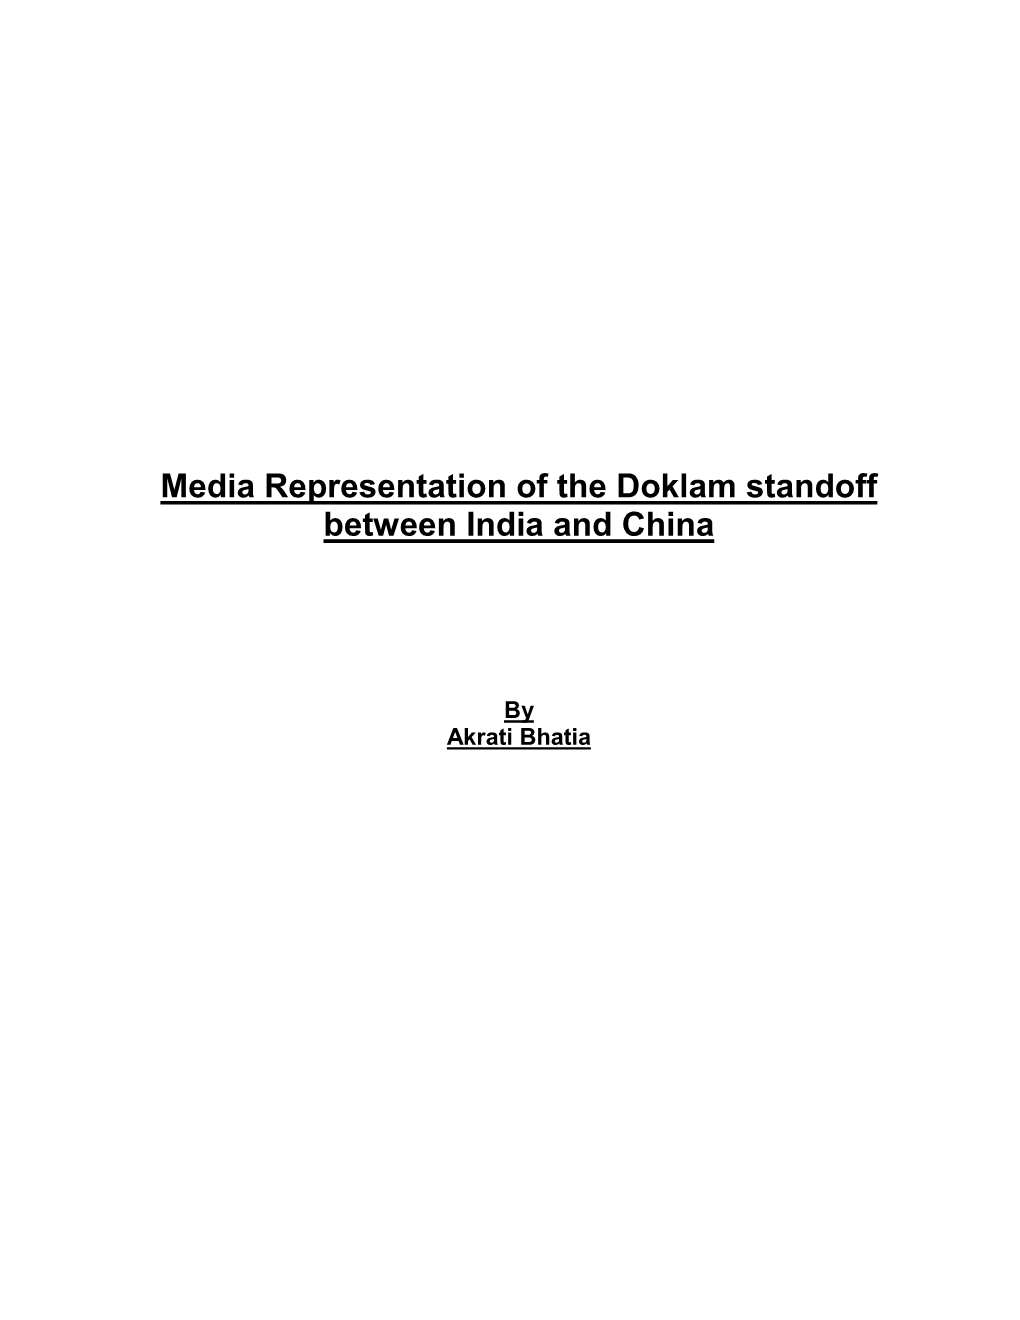 Media Representation of the Doklam Standoff Between India and China